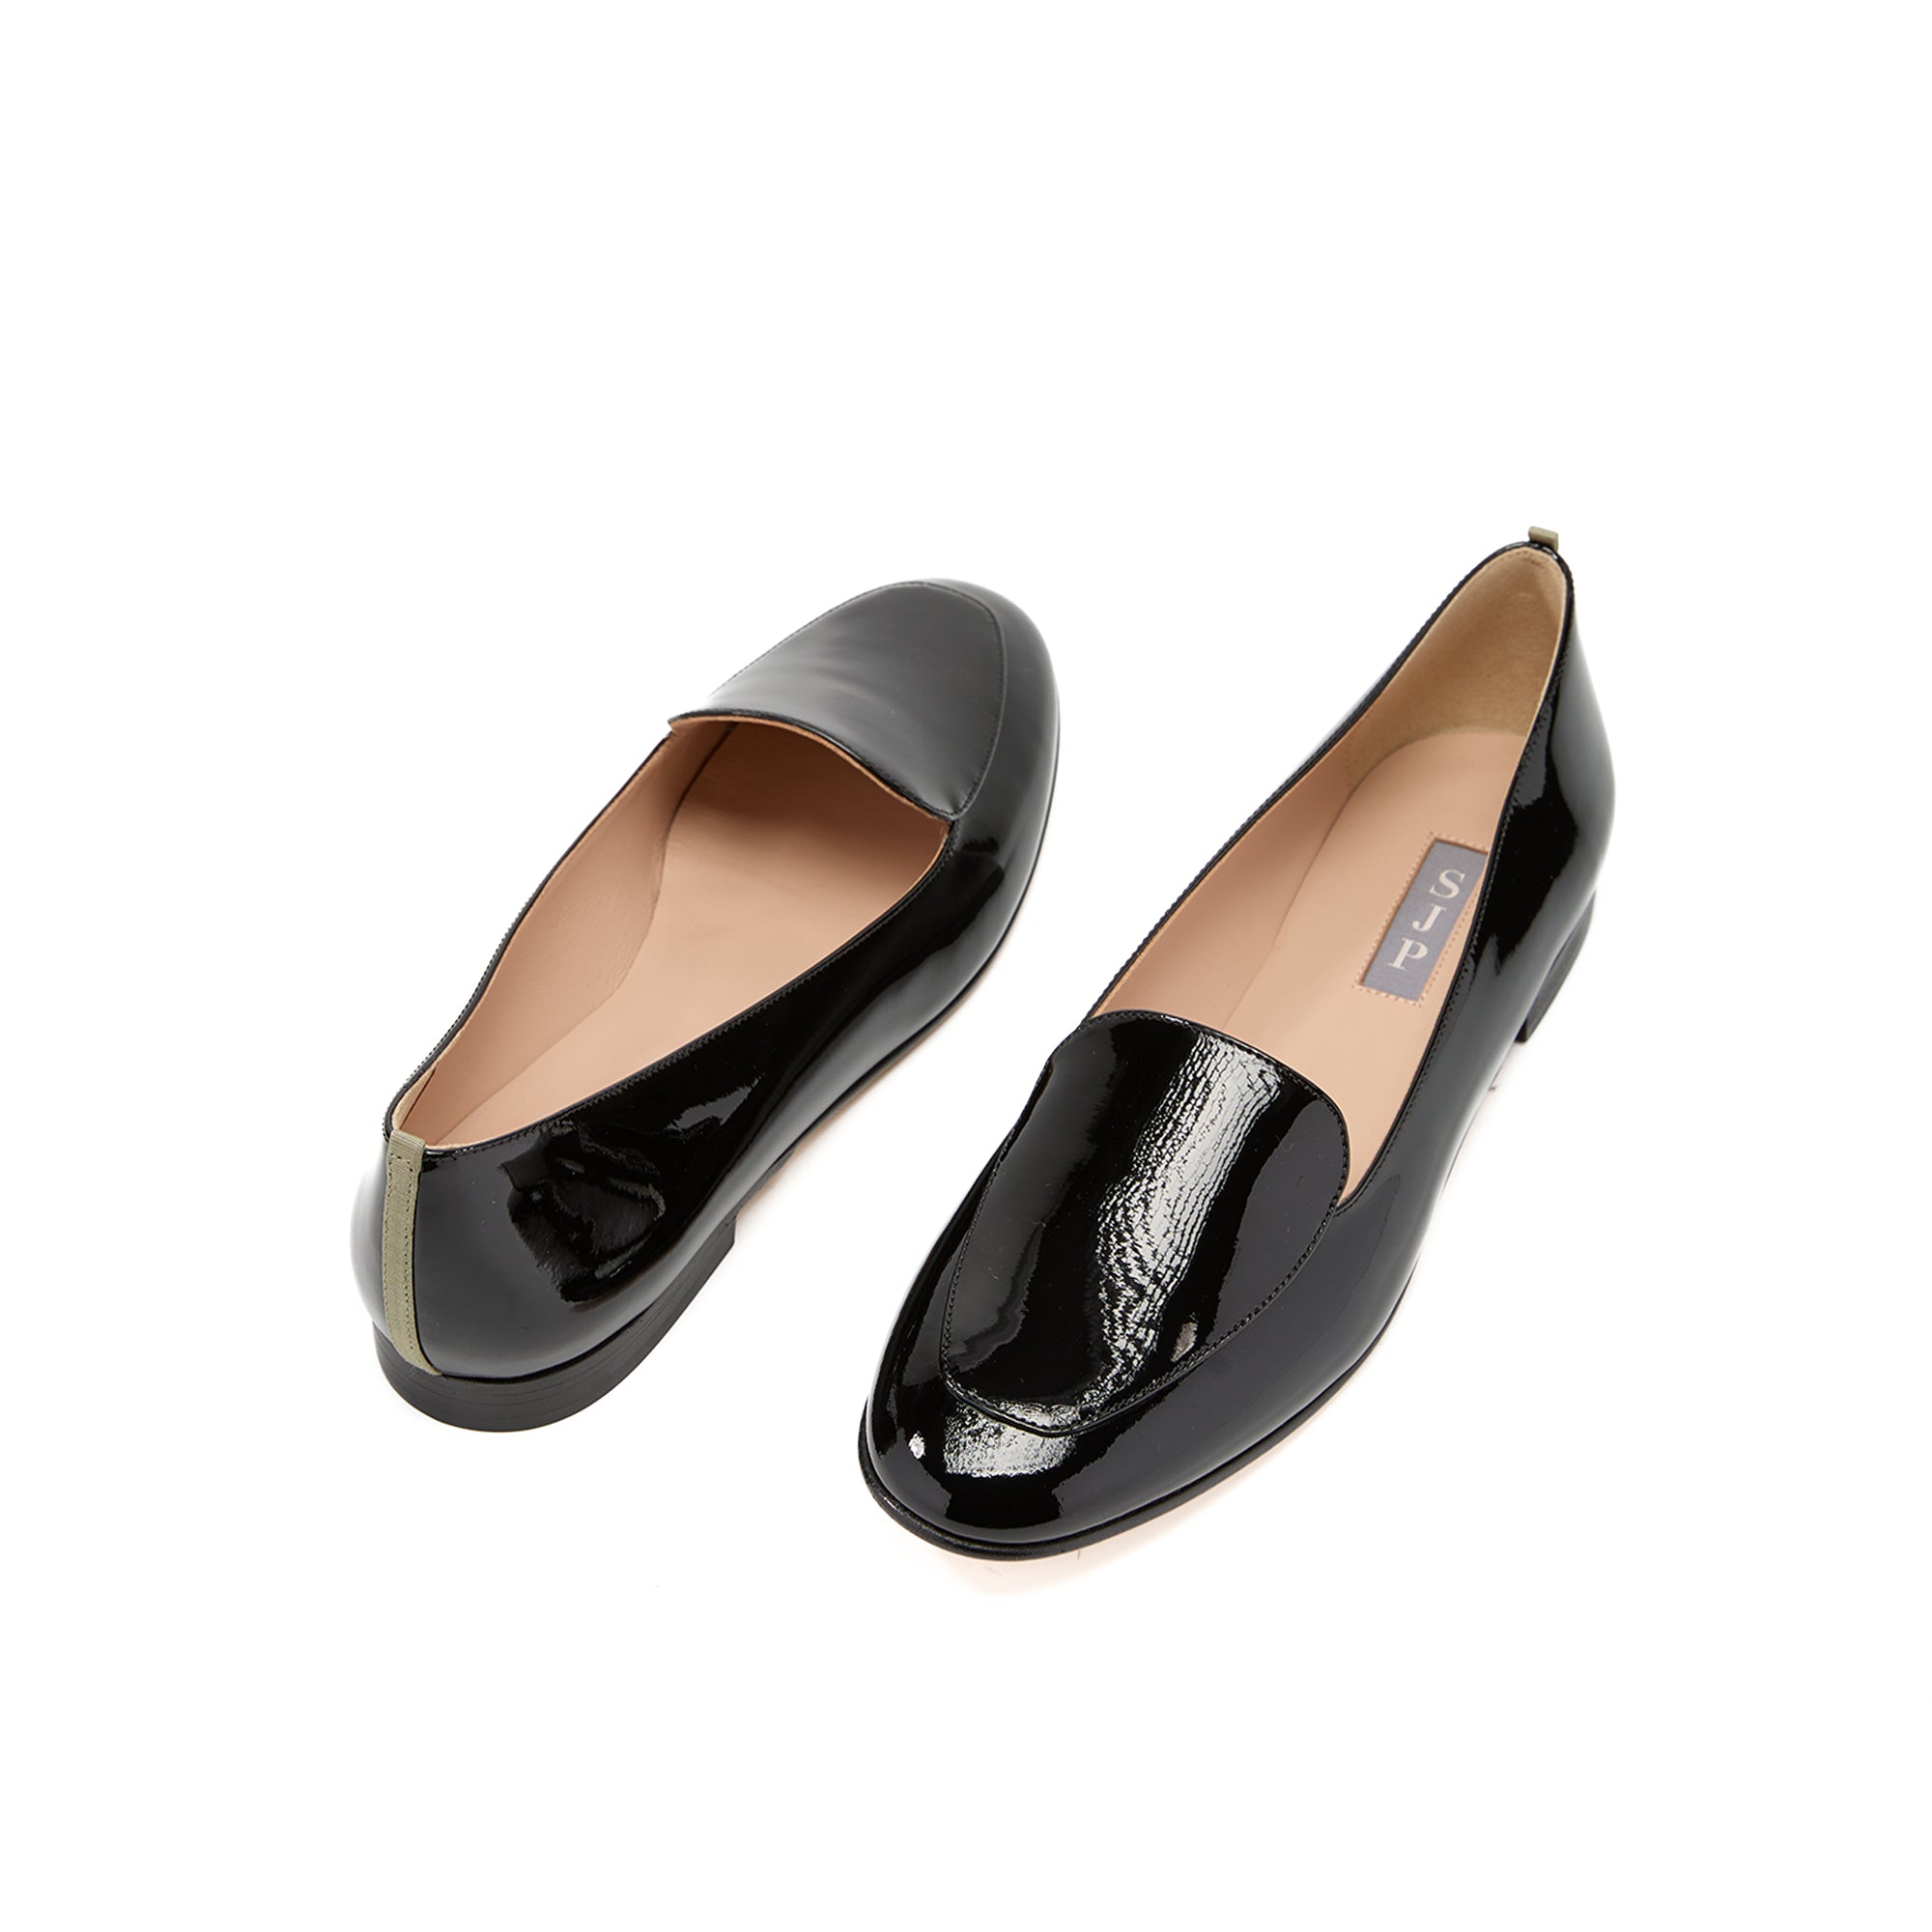 SJP by Sarah Jessica Parker Ped Bis 10mm Black Patent Flat Sandals